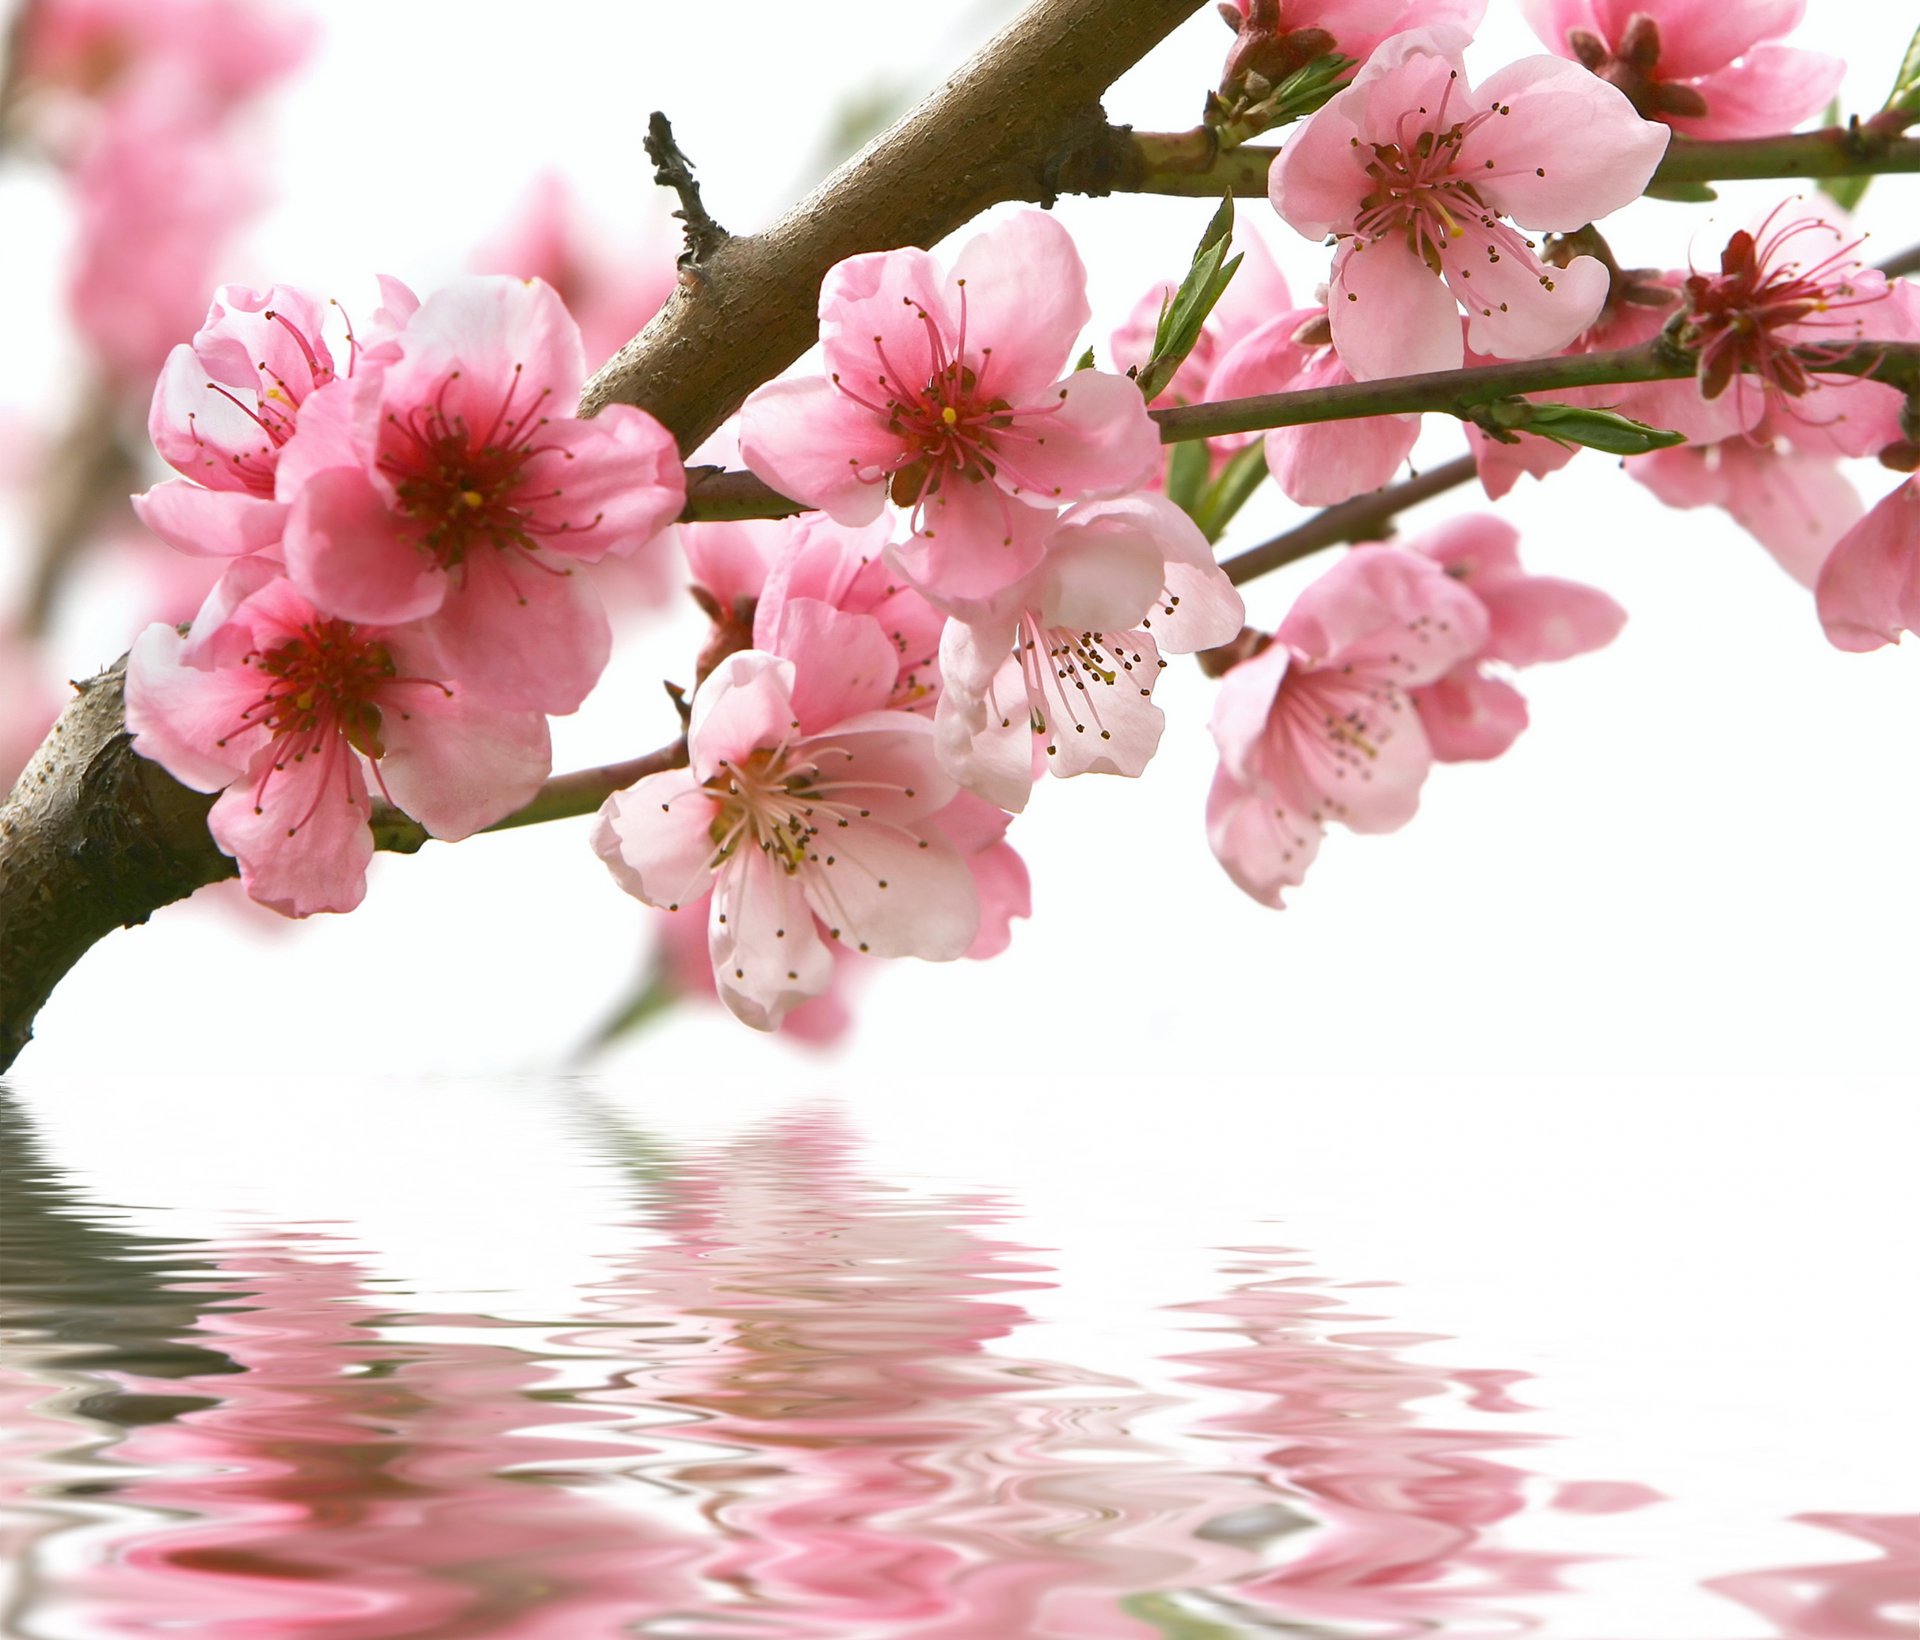 printemps sakura branche fleurs rose eau réflexion